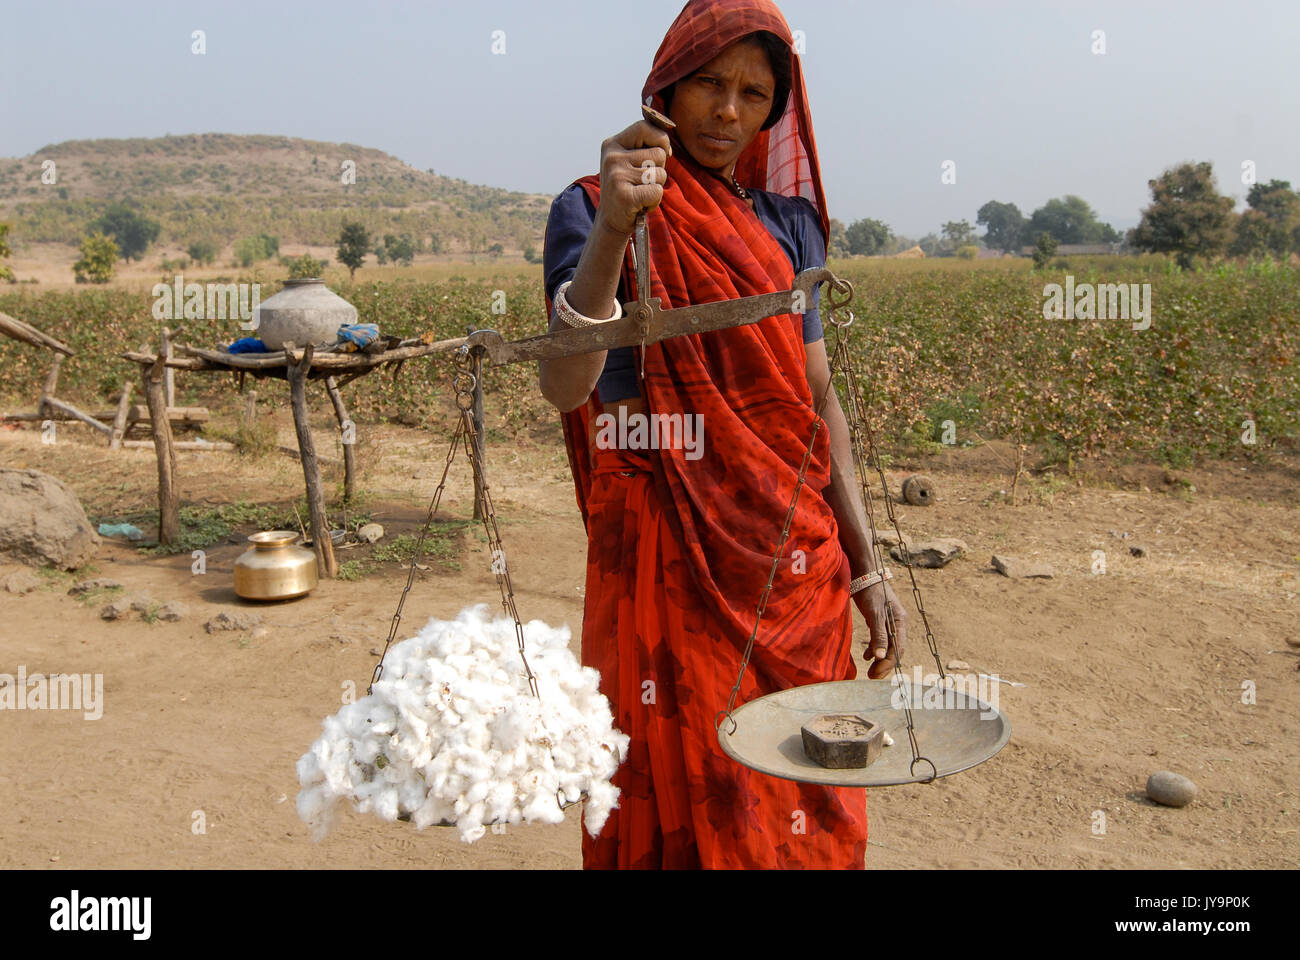 Indien Madhya Pradesh, Baumwollanbau in Kasrawad, Frau wiegen Baumwollernte/INDIEN Madhya Pradesh, Baumwollanbau, Adivasi Frau mit Waage Stockfoto